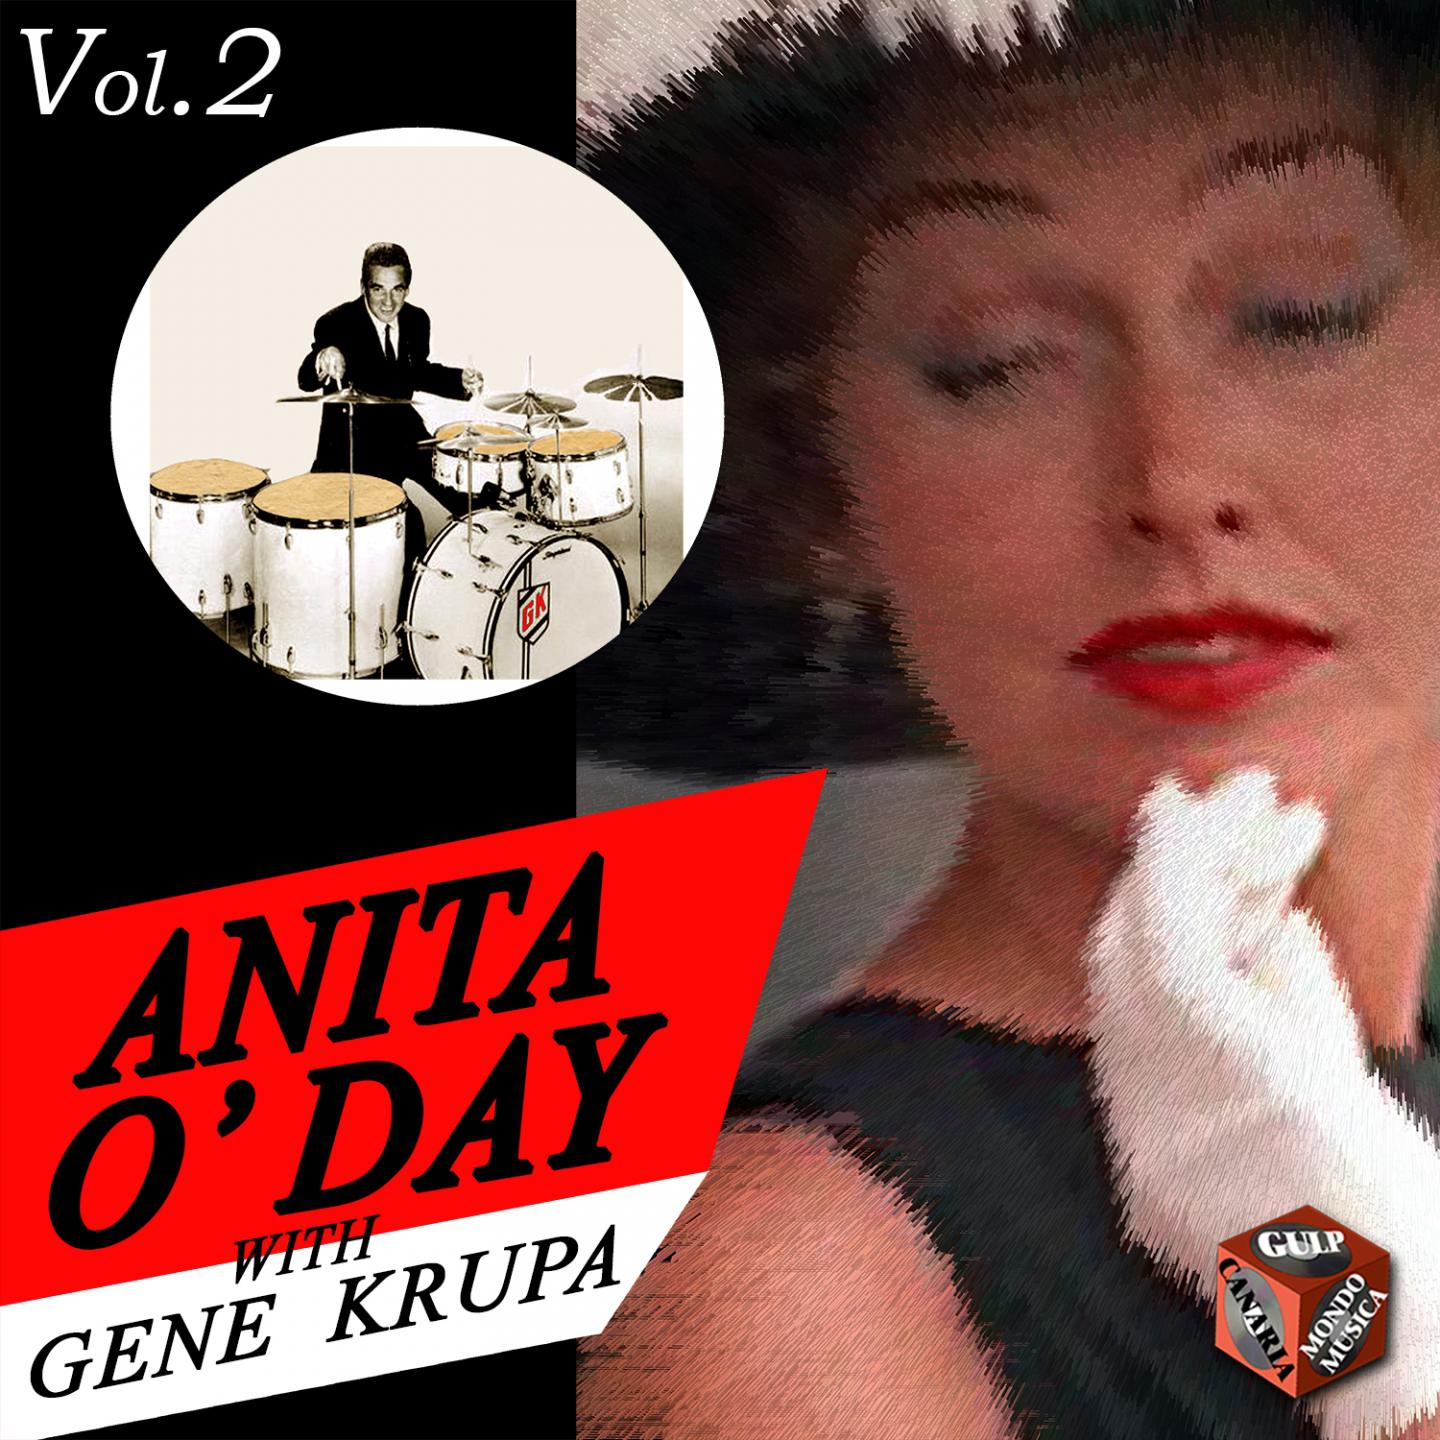 Anita O' Day with Gene Krupa, Vol. 2